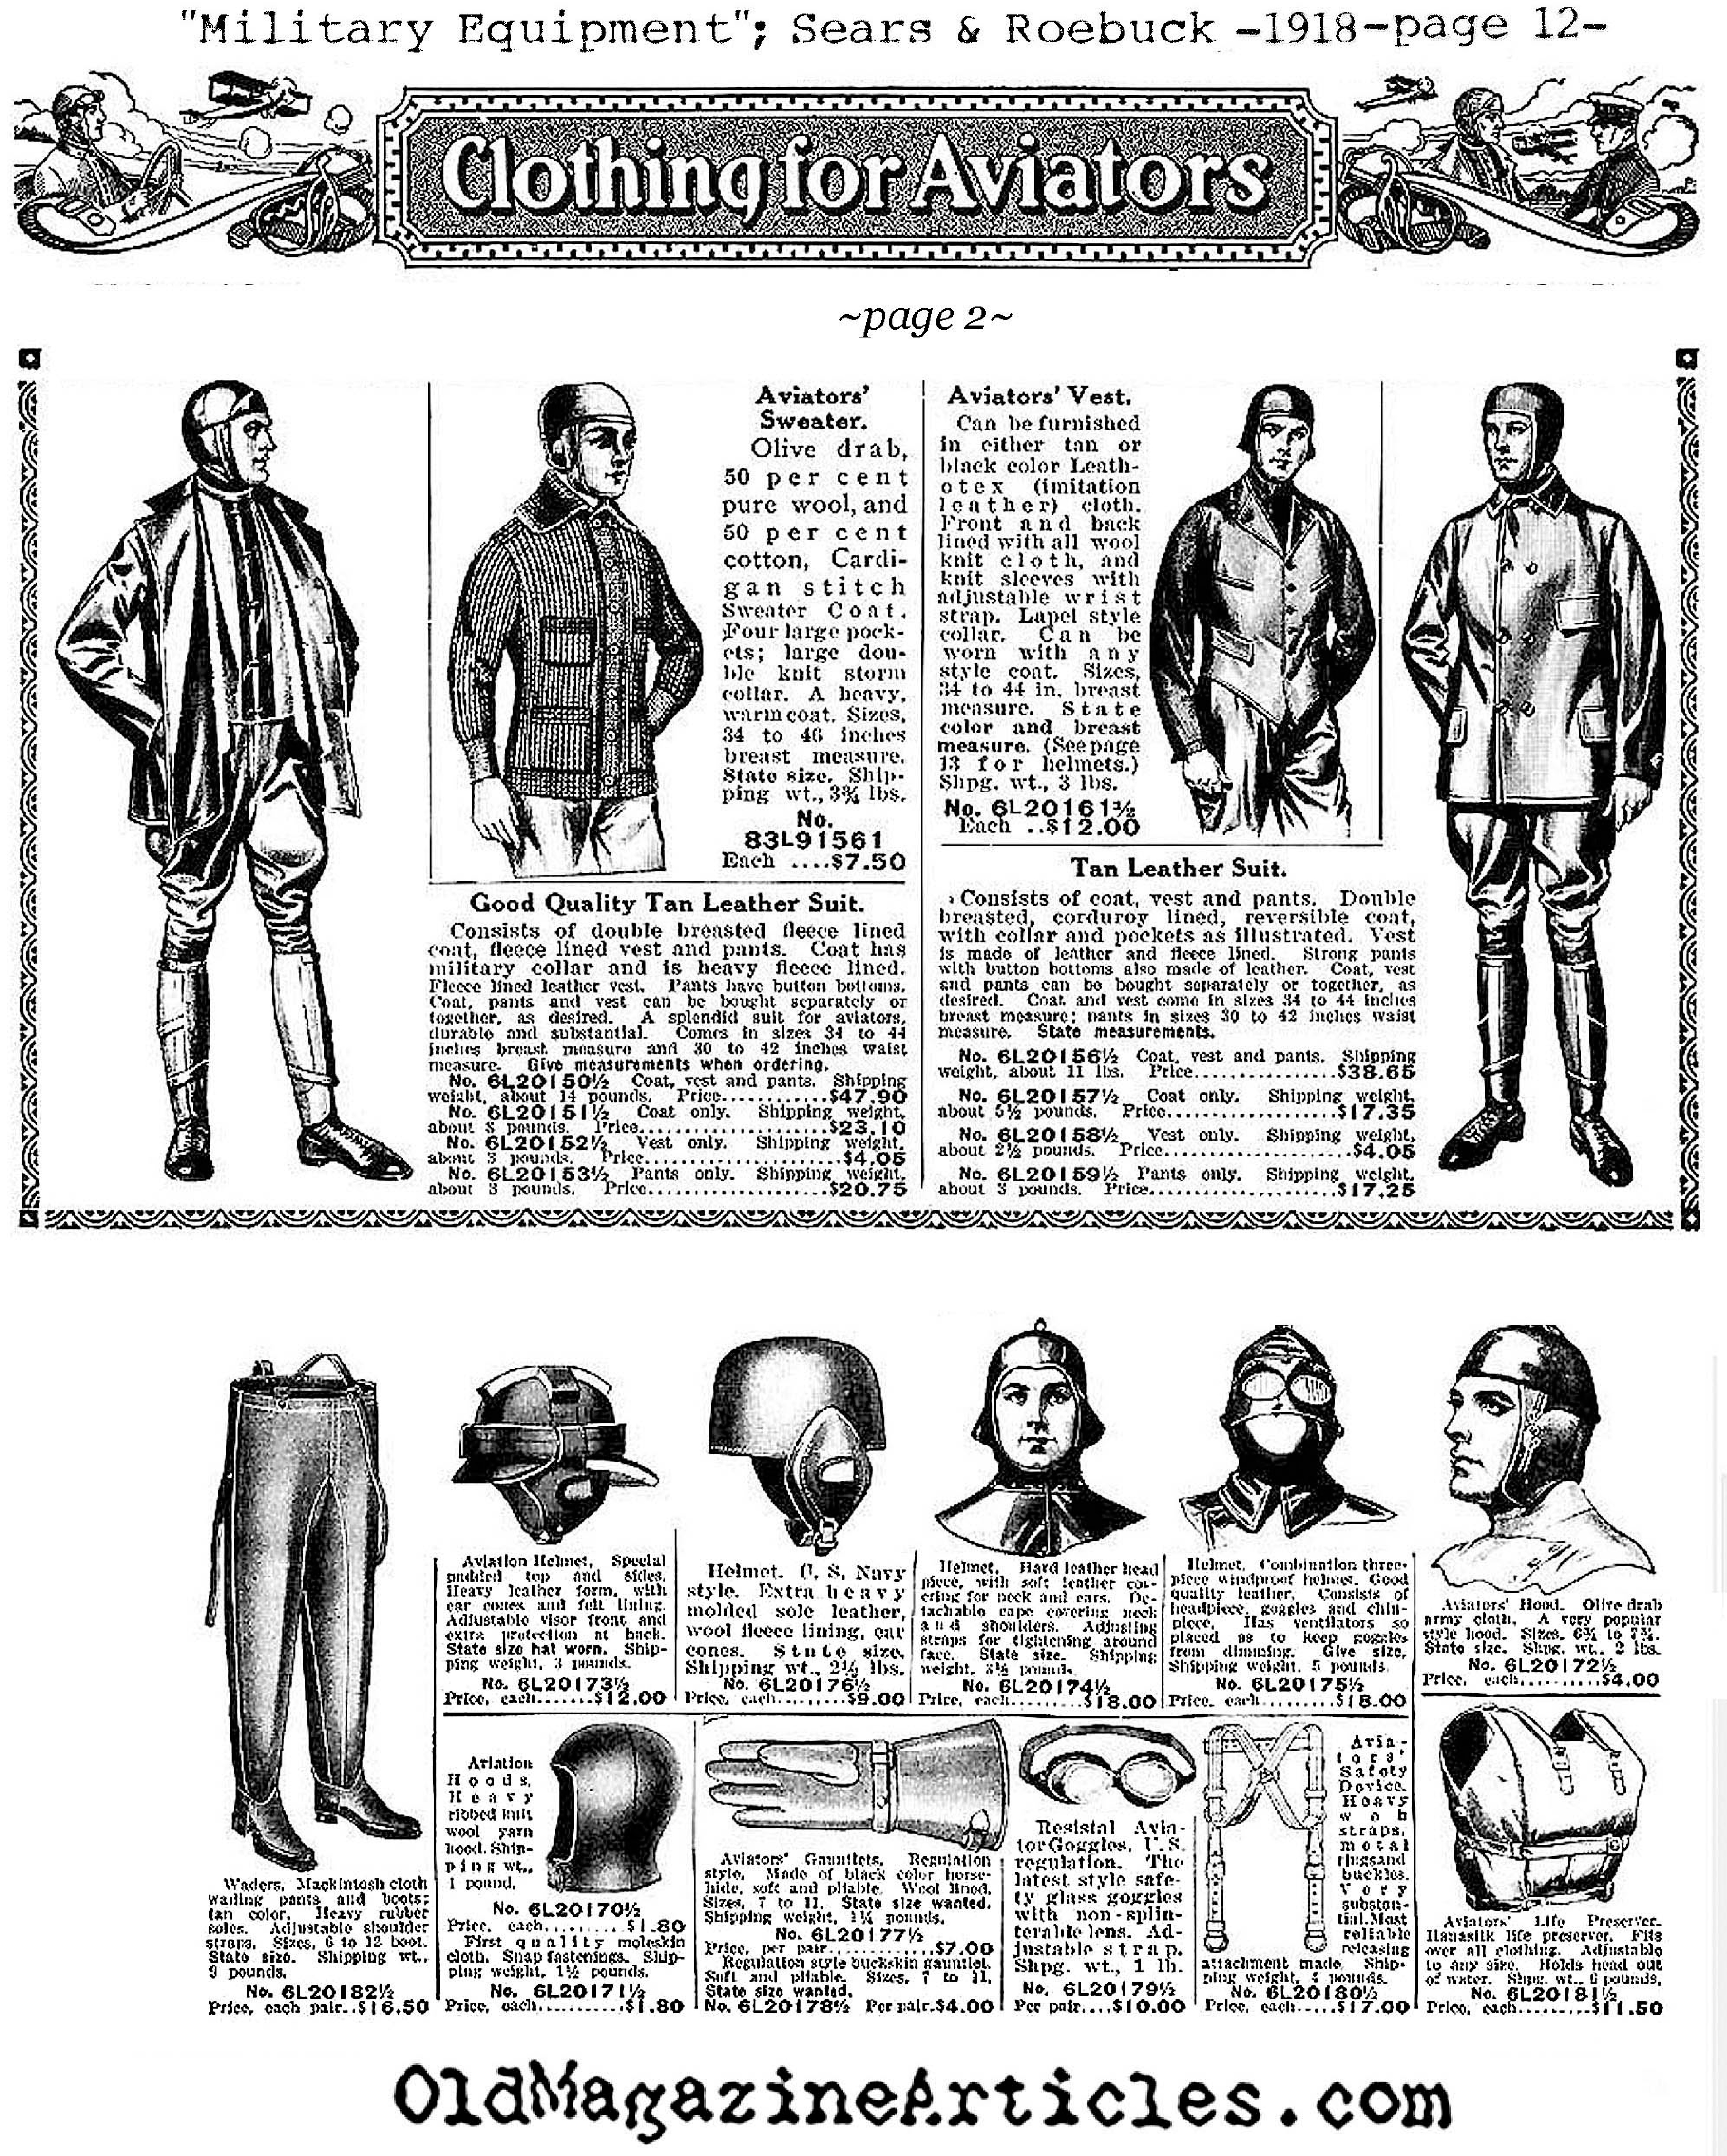 Flight Clothing for Aviators  (Sears and Roebuck, 1918)